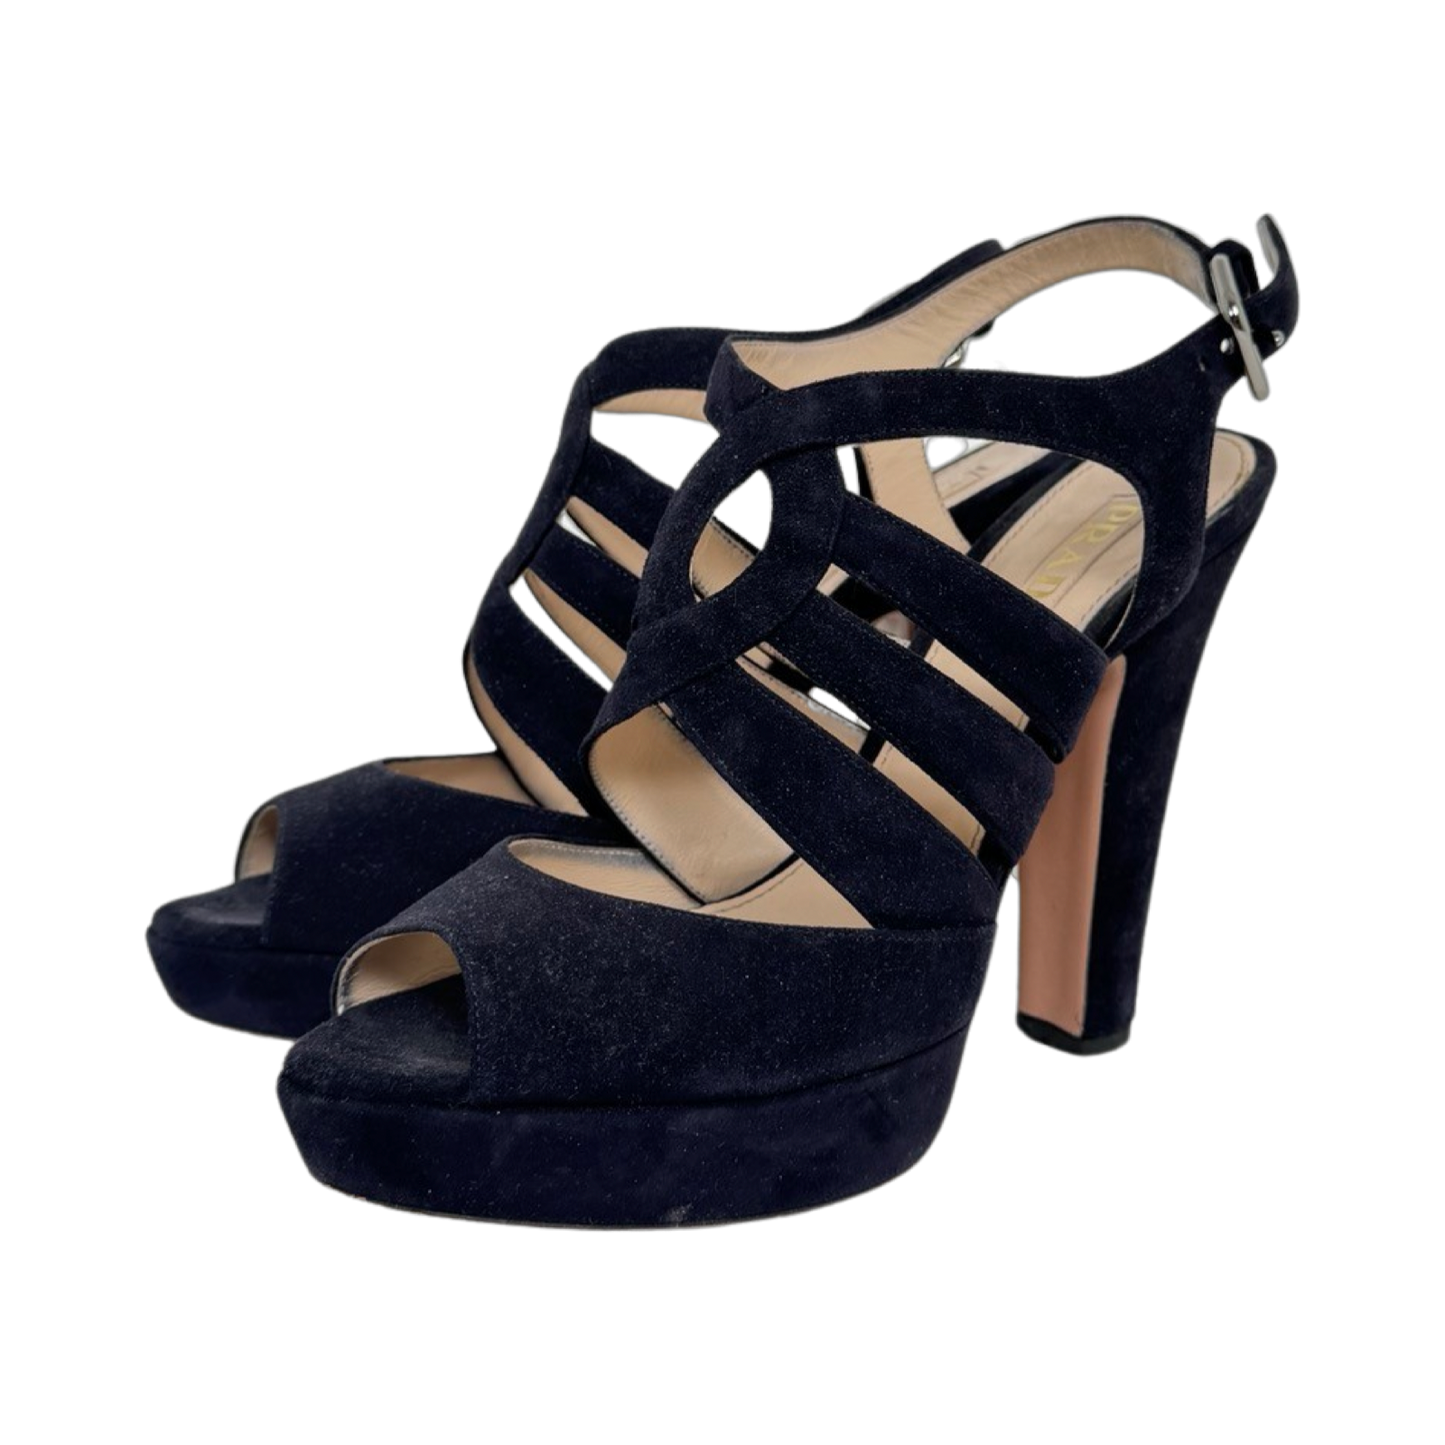 Prada Suede Peep Toe Sandals (Size 38.5)